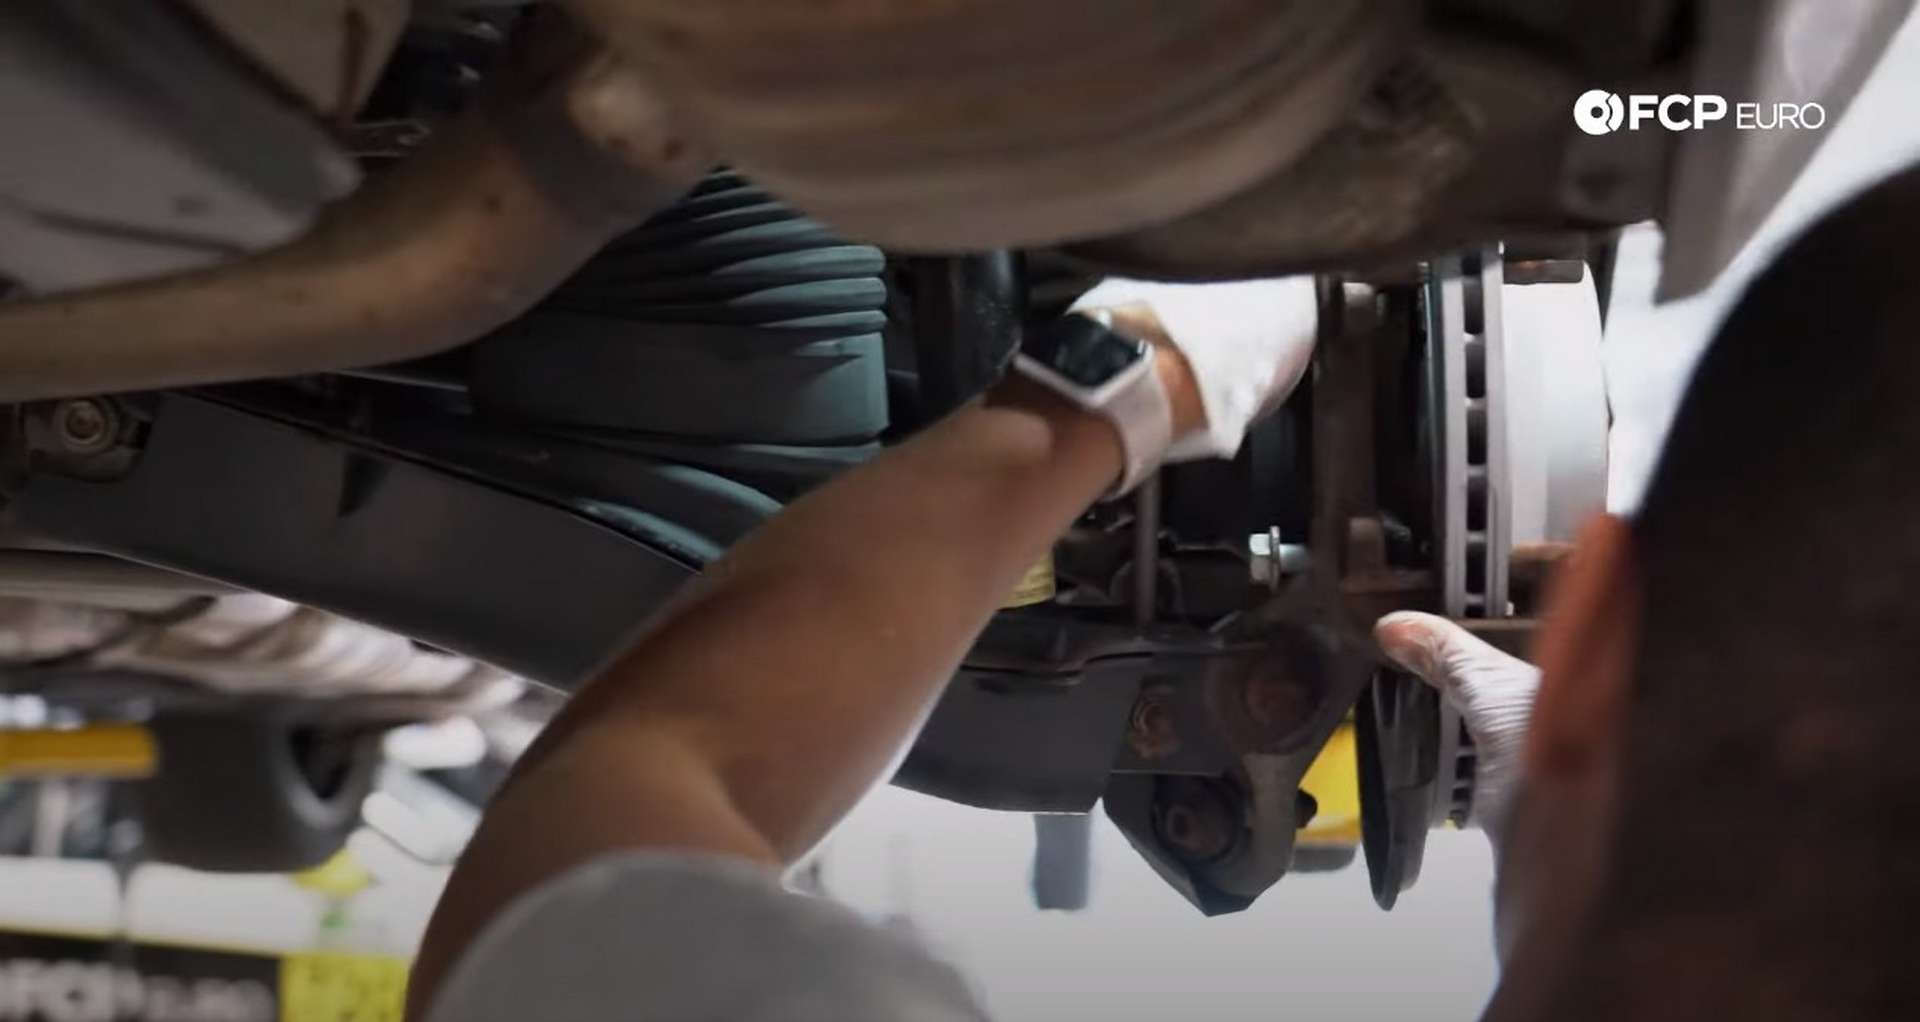 DIY Mercedes W211/212 Rear Brake Job reinstalling the caliper bracket